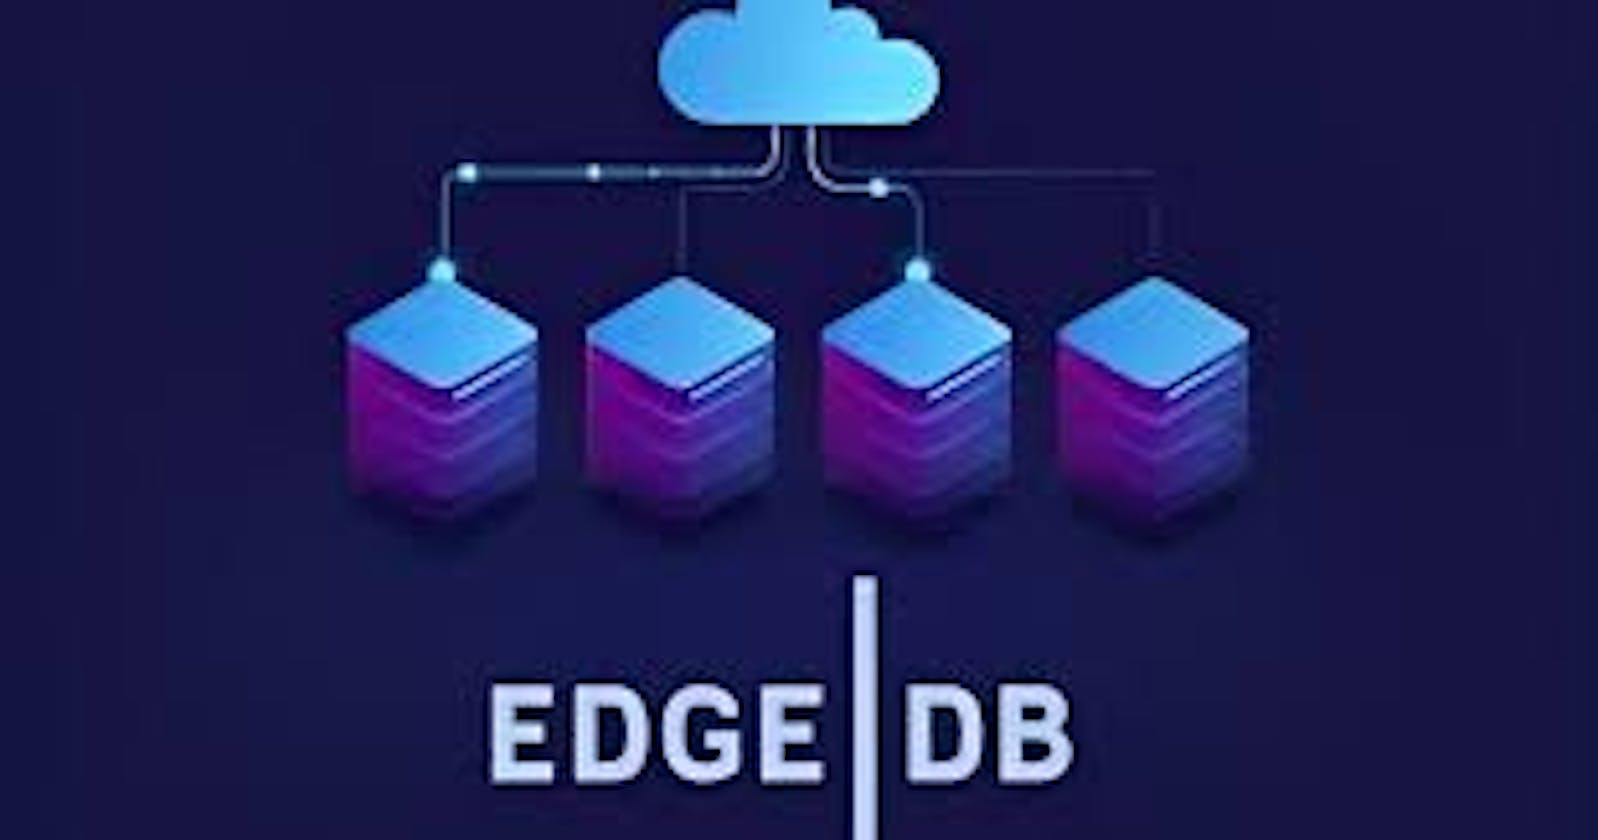 EdgeDB
EdgeDB is the next-generation object-relational database